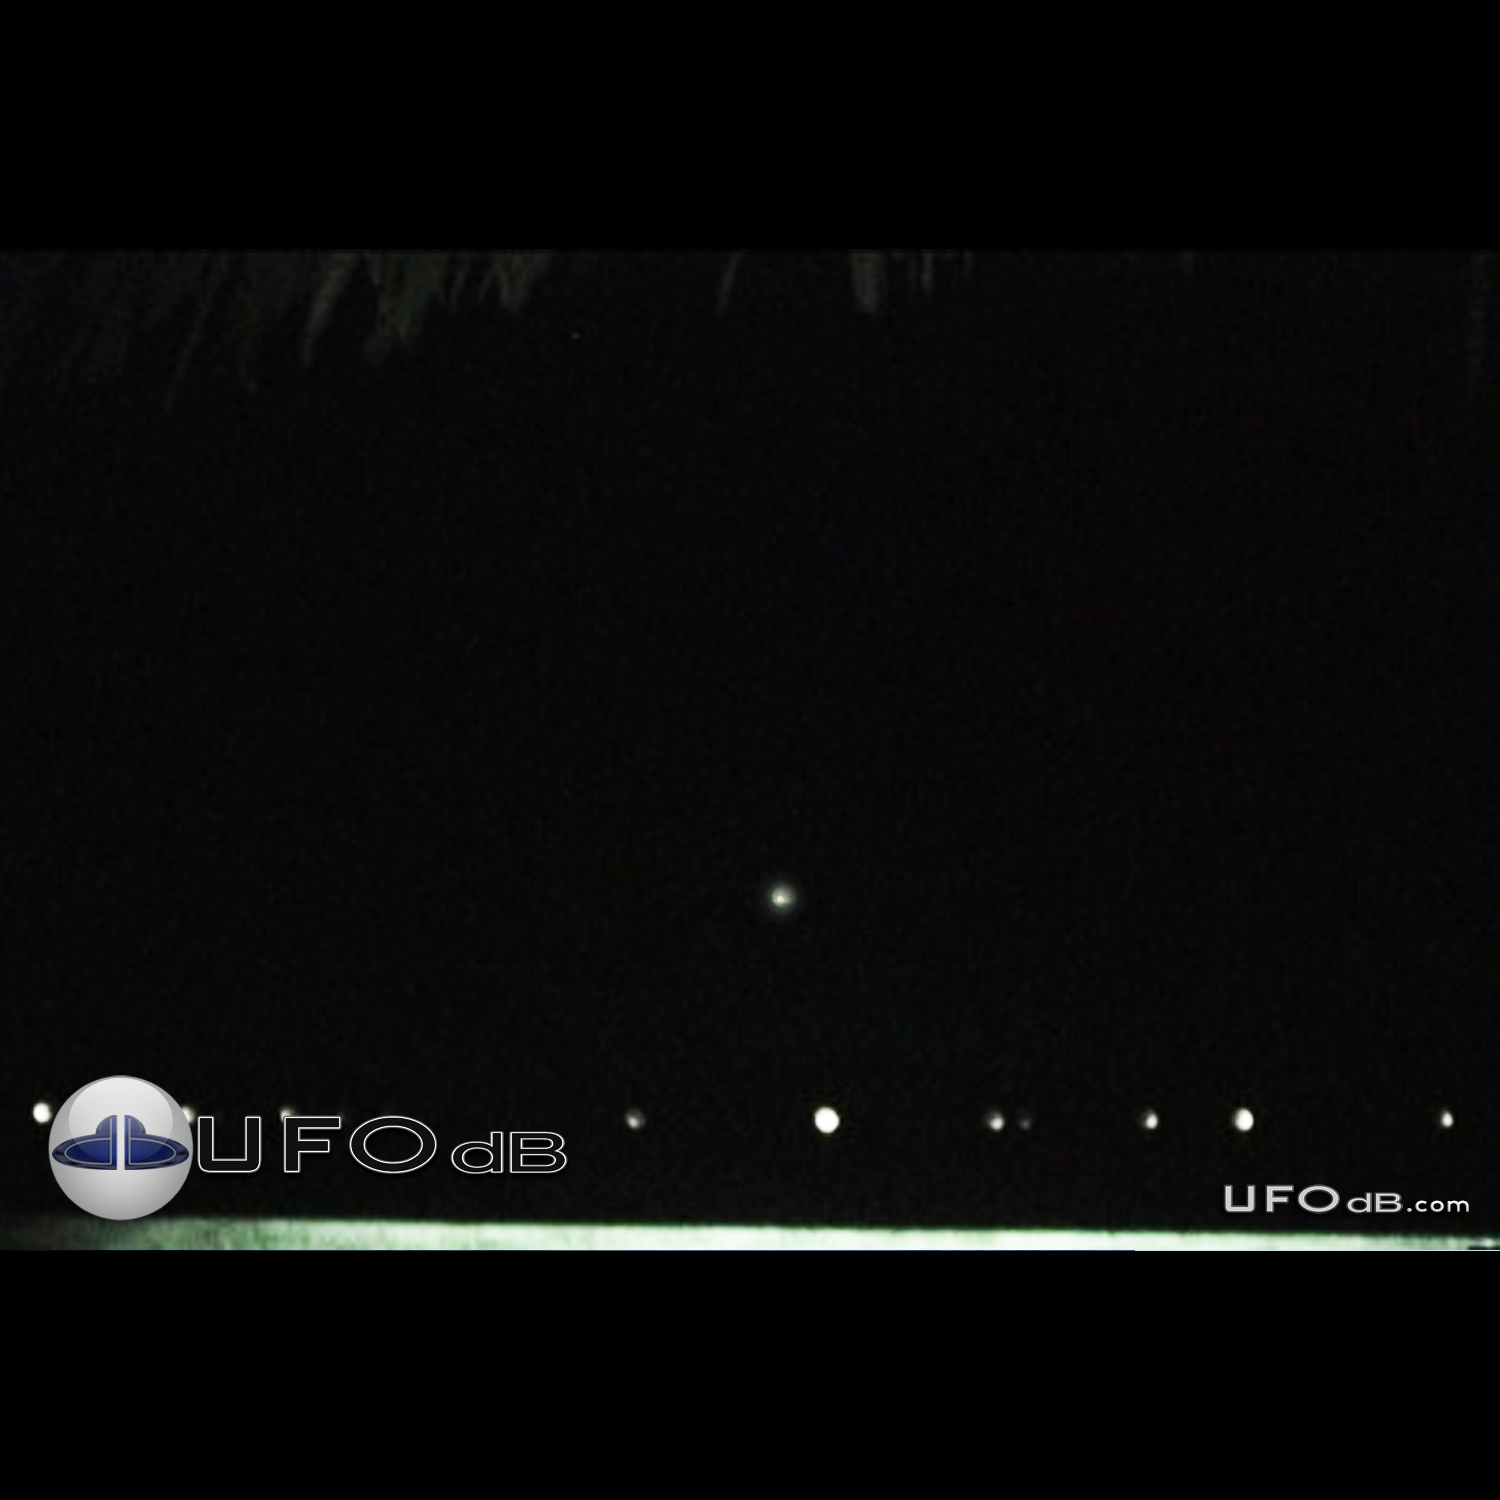 In the Dark Night, picture captures UFO over the Ocean | Ecuador 2009 UFO Picture #248-1